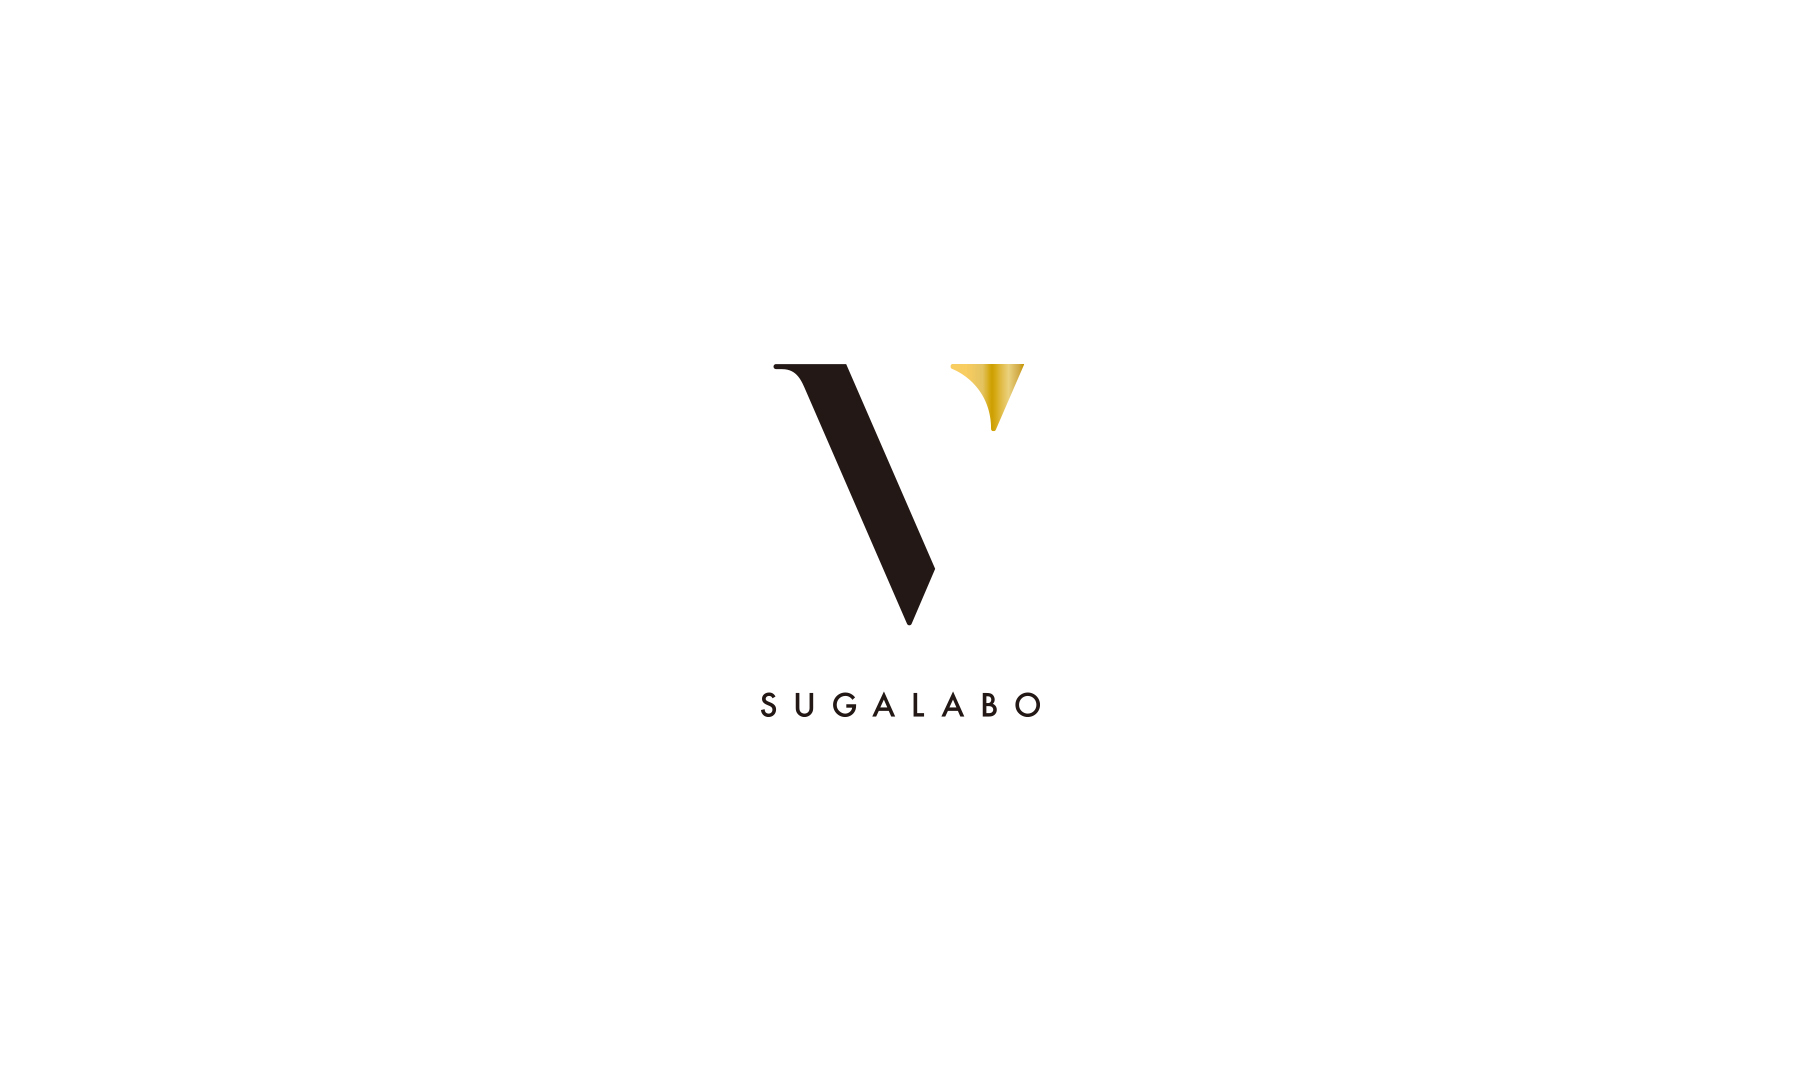 SUGALABO V's image